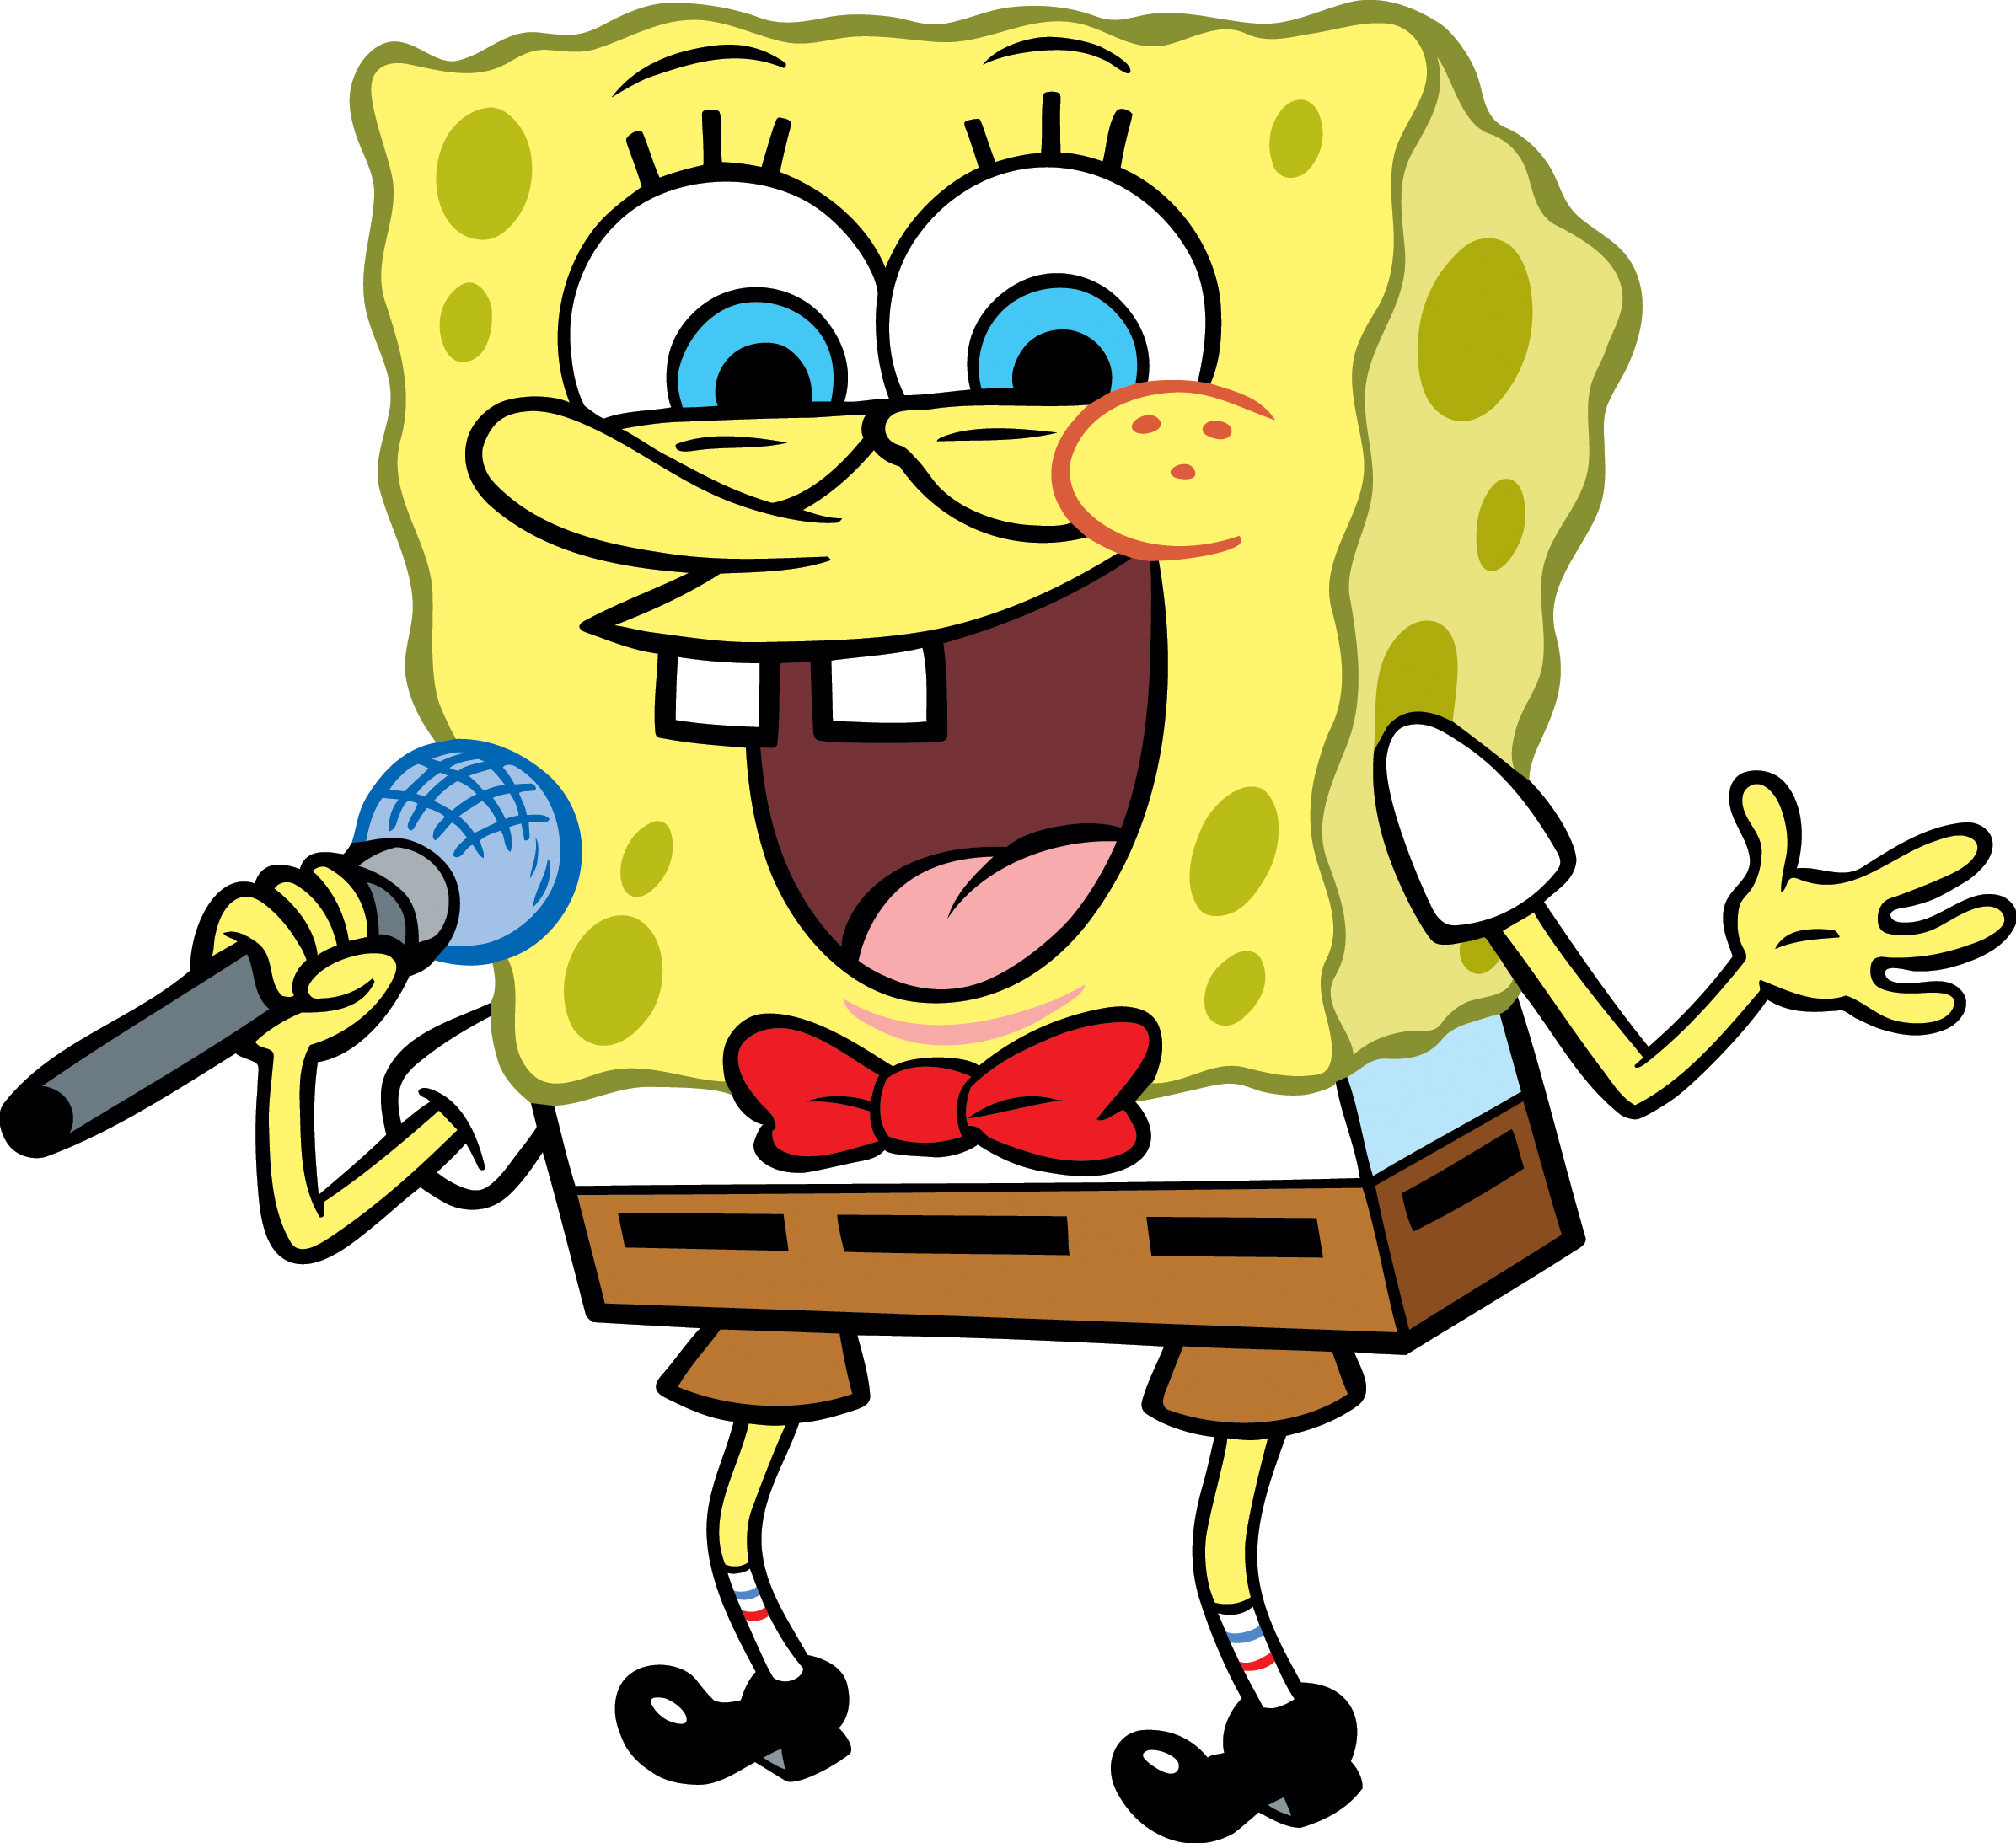 SpongeBob SquarePants (character) | Nickelodeon | Fandom powered ...